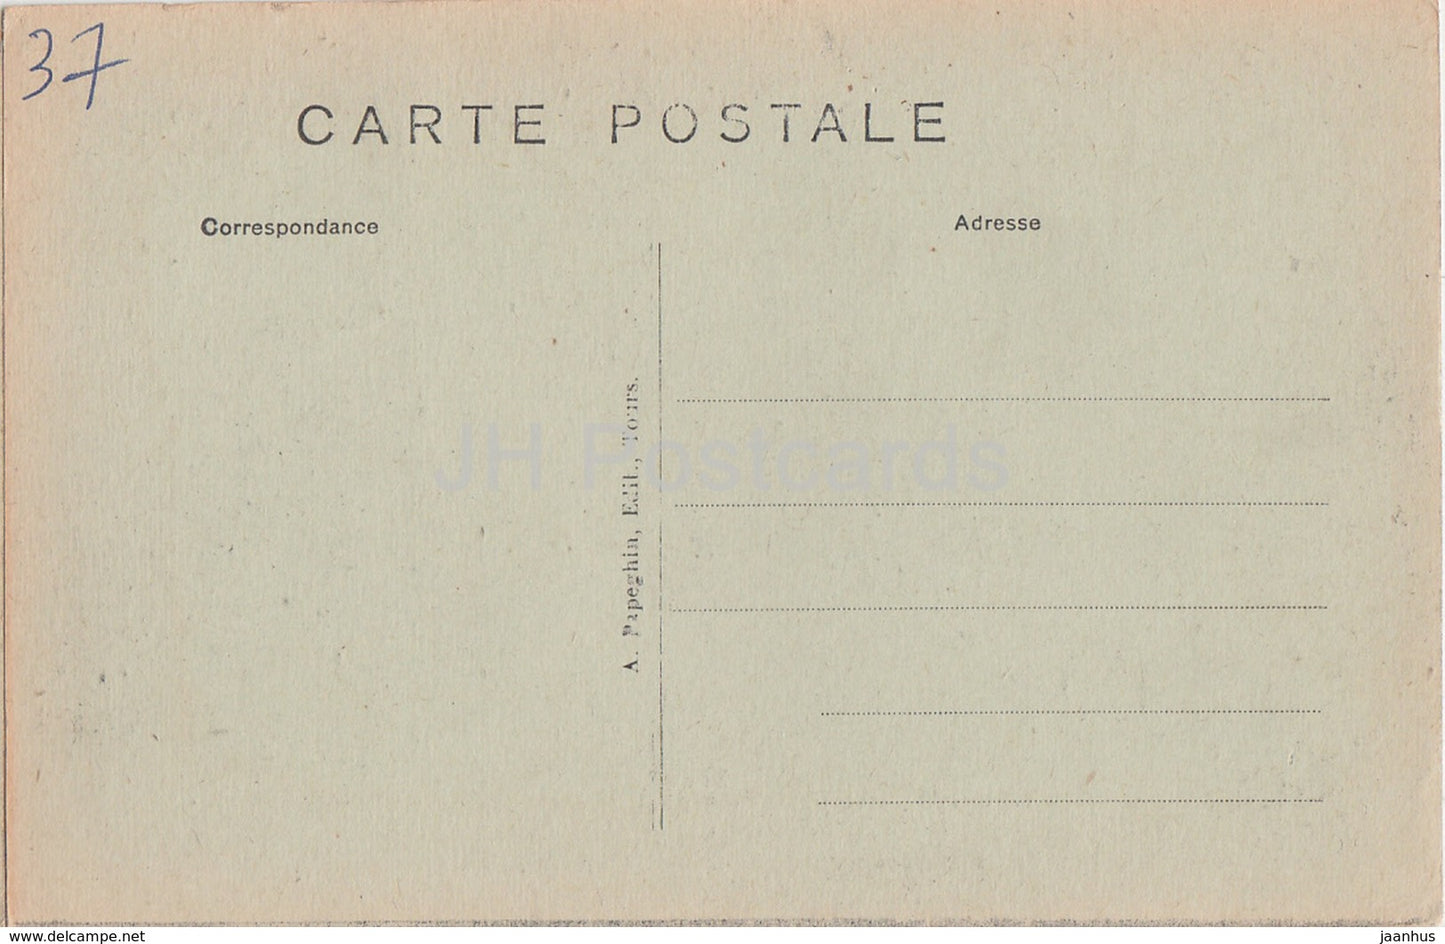 Azay Le Rideau - Le Chateau National - Facade Meridionale - castle - 14 - old postcard - France - unused